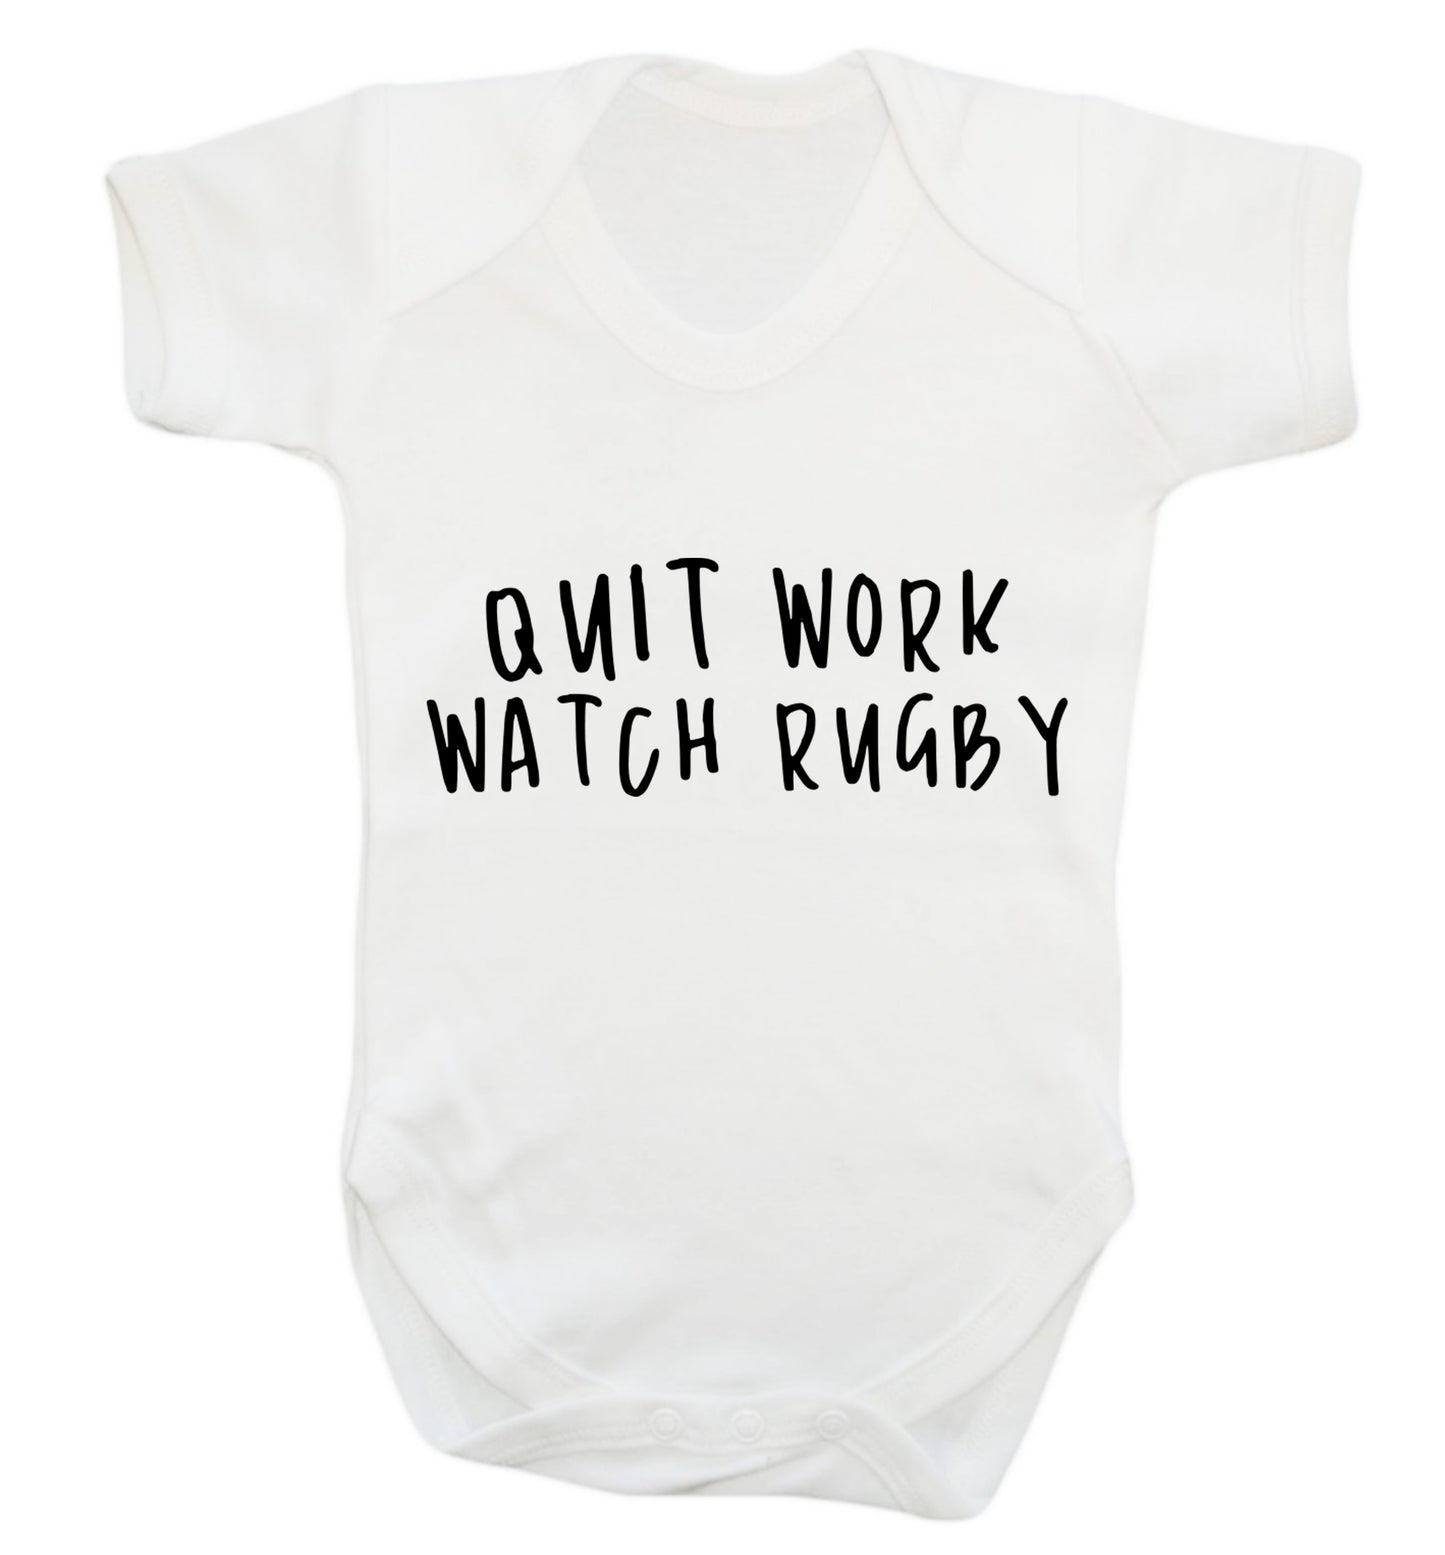 Quit work watch rugby Baby Vest white 18-24 months